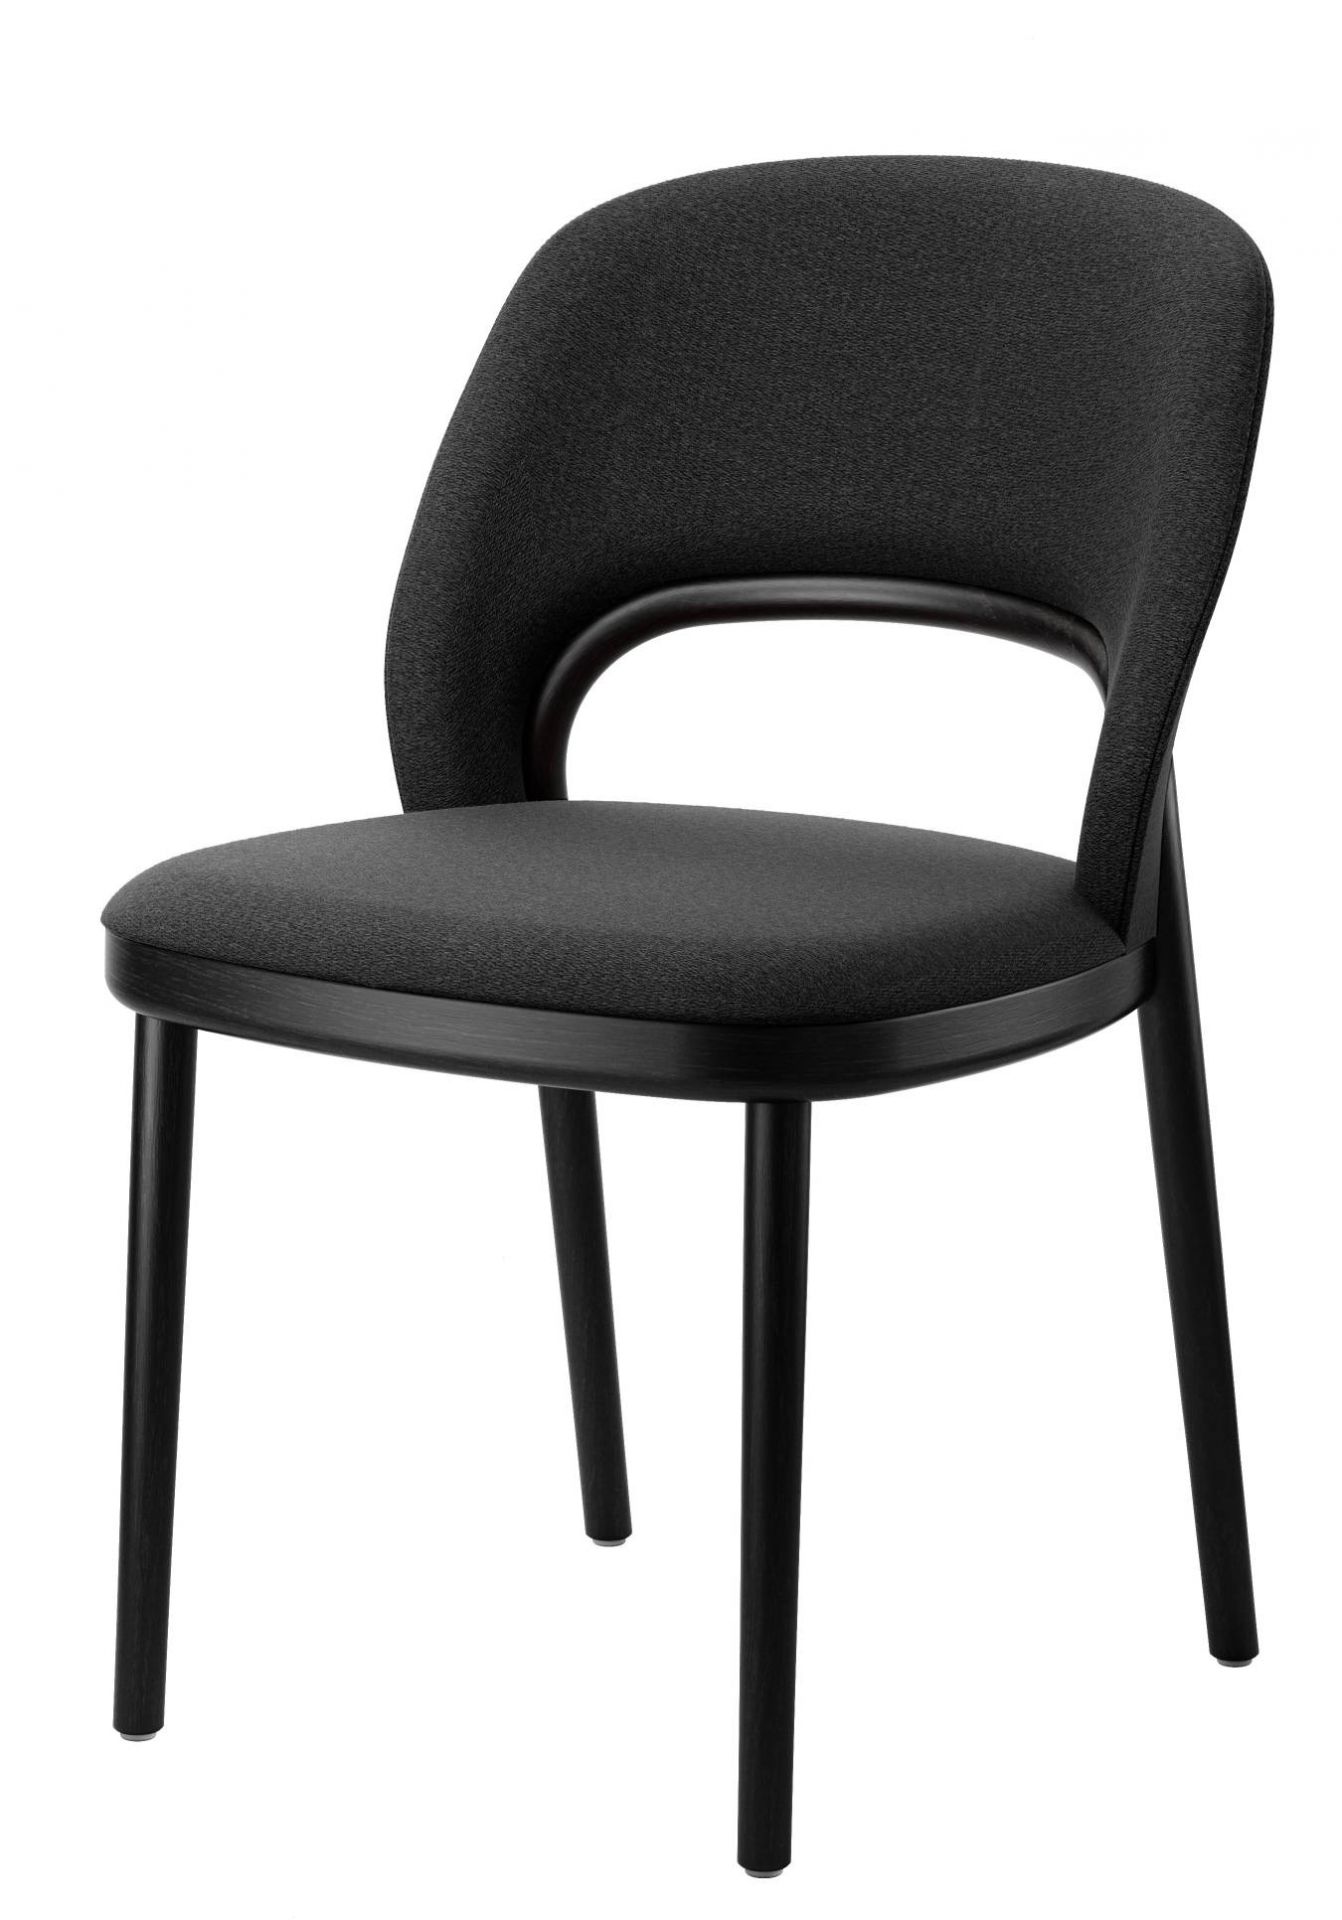 520 P Upholstered chair Thonet